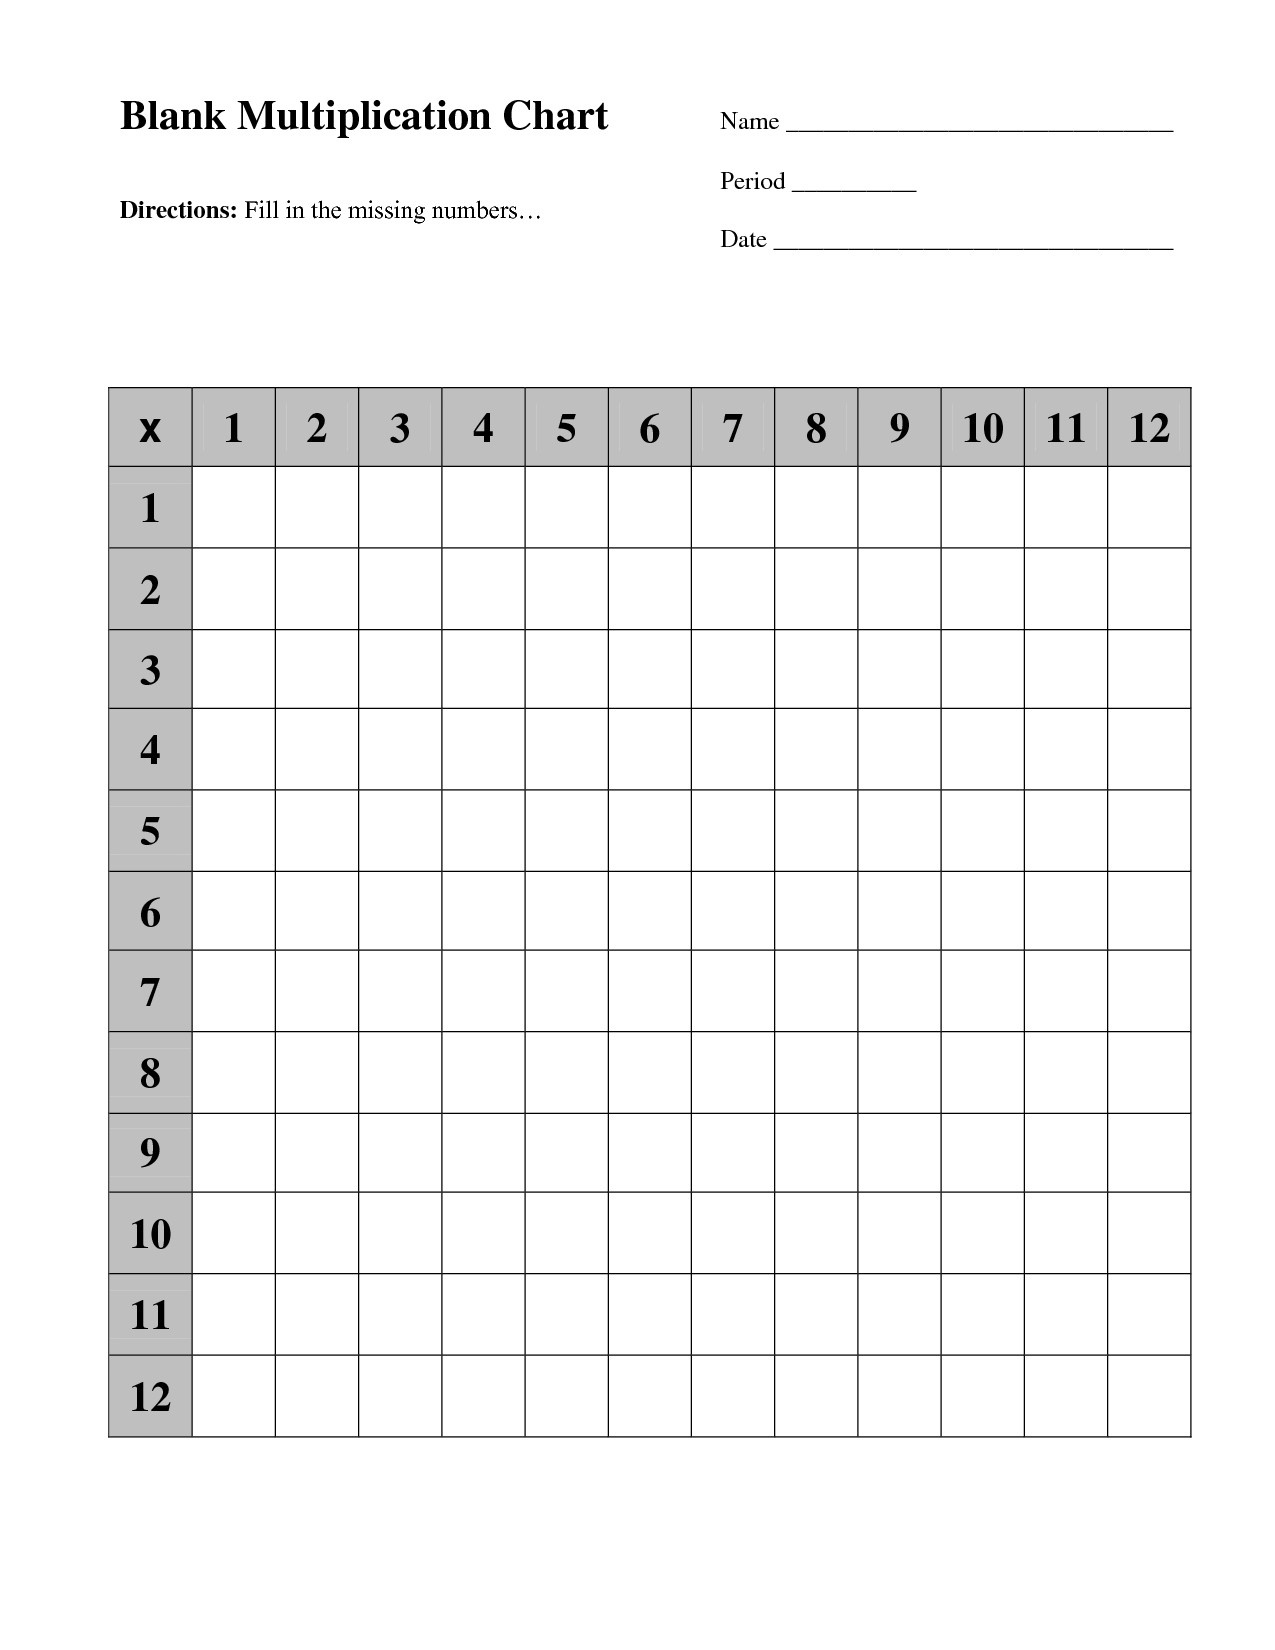 Rontavstudio » Free Printable Blank Multiplication Table - Free Printable Blank Multiplication Table 1 12